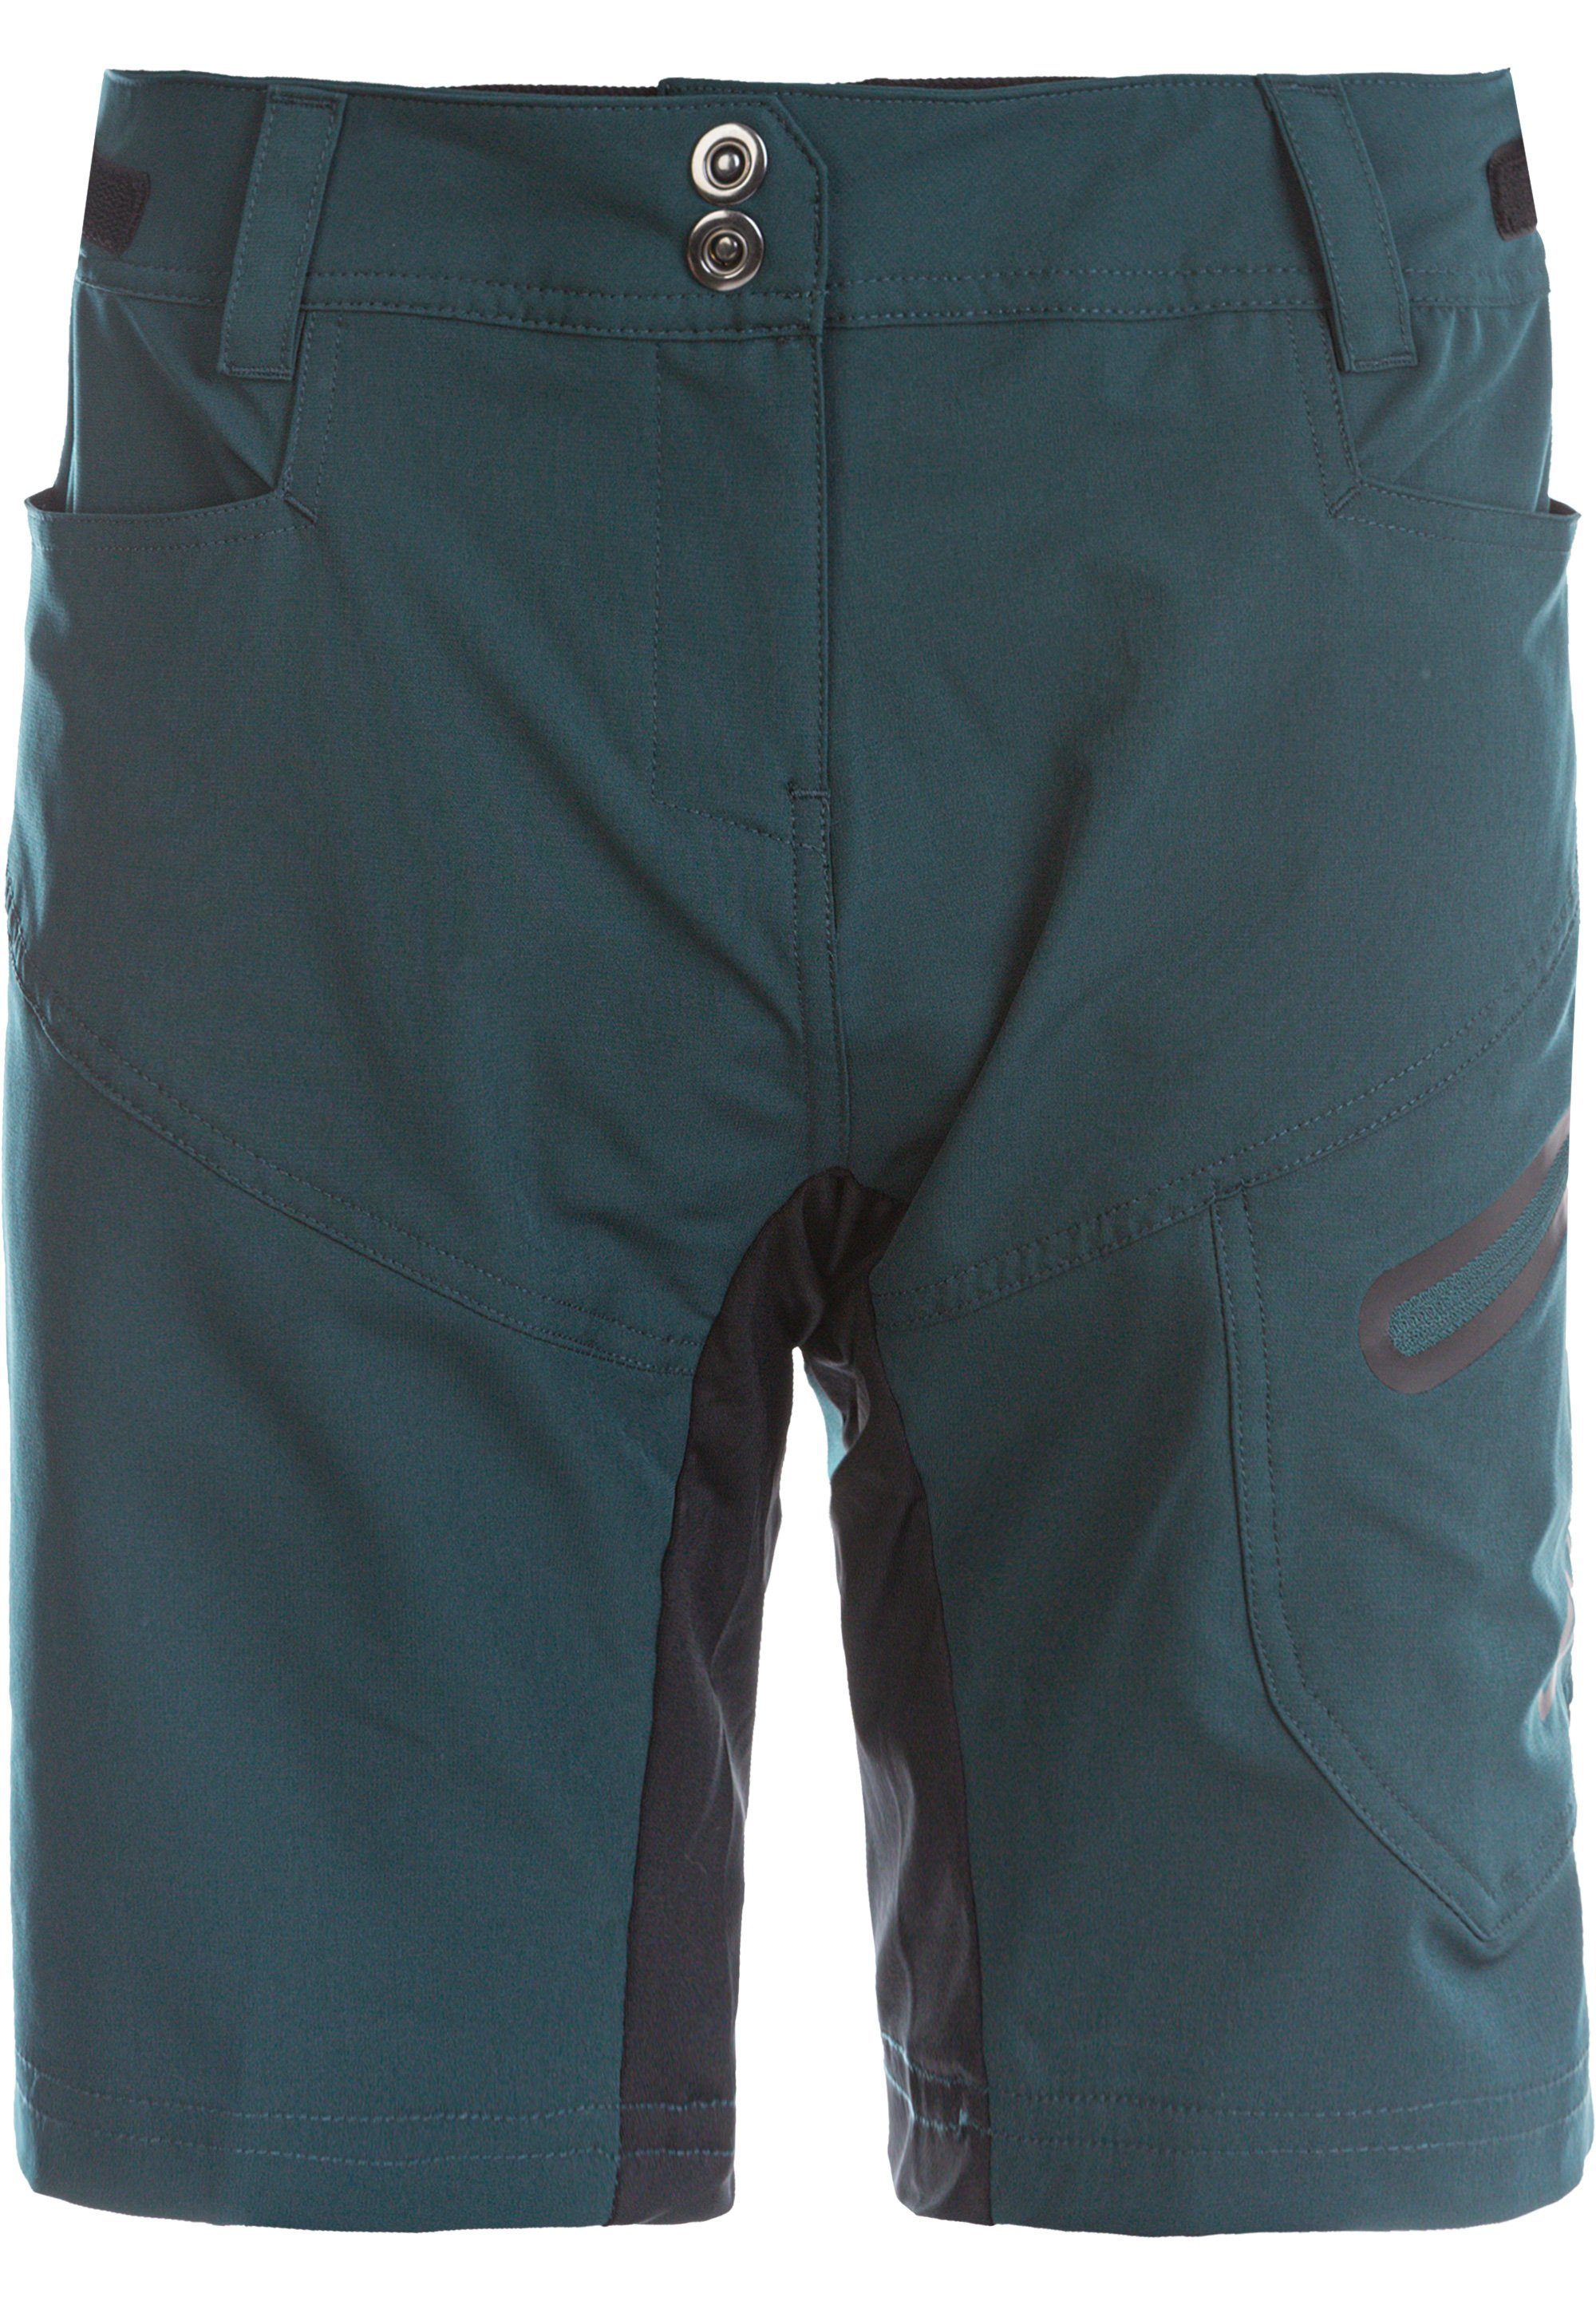 2 1 dunkelgrün Jamilla in ENDURANCE herausnehmbarer Shorts mit W Radhose Innen-Tights